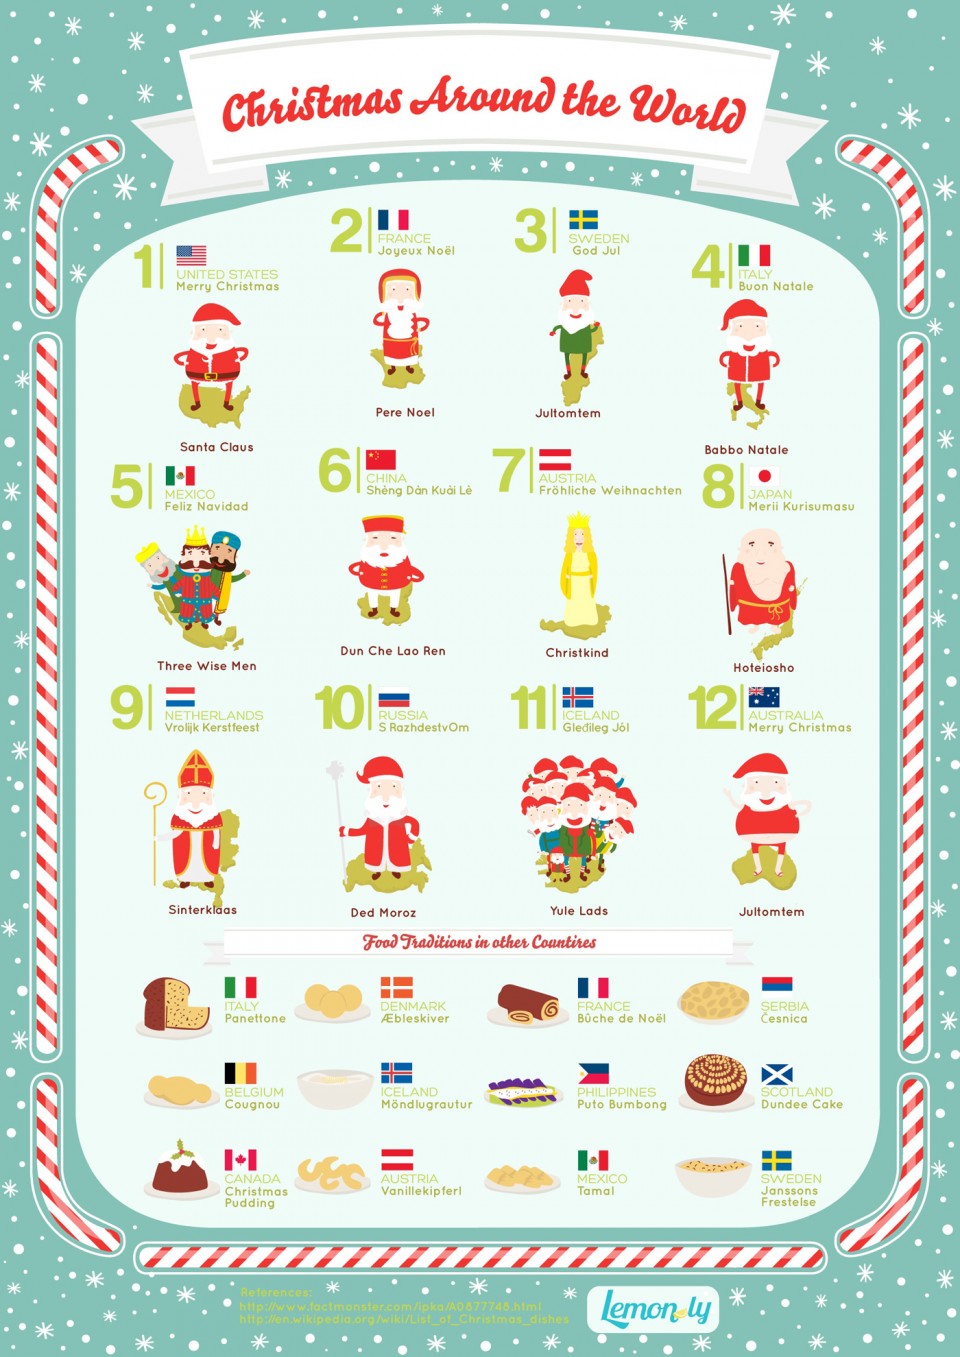 Christmas Around the World: Infographic